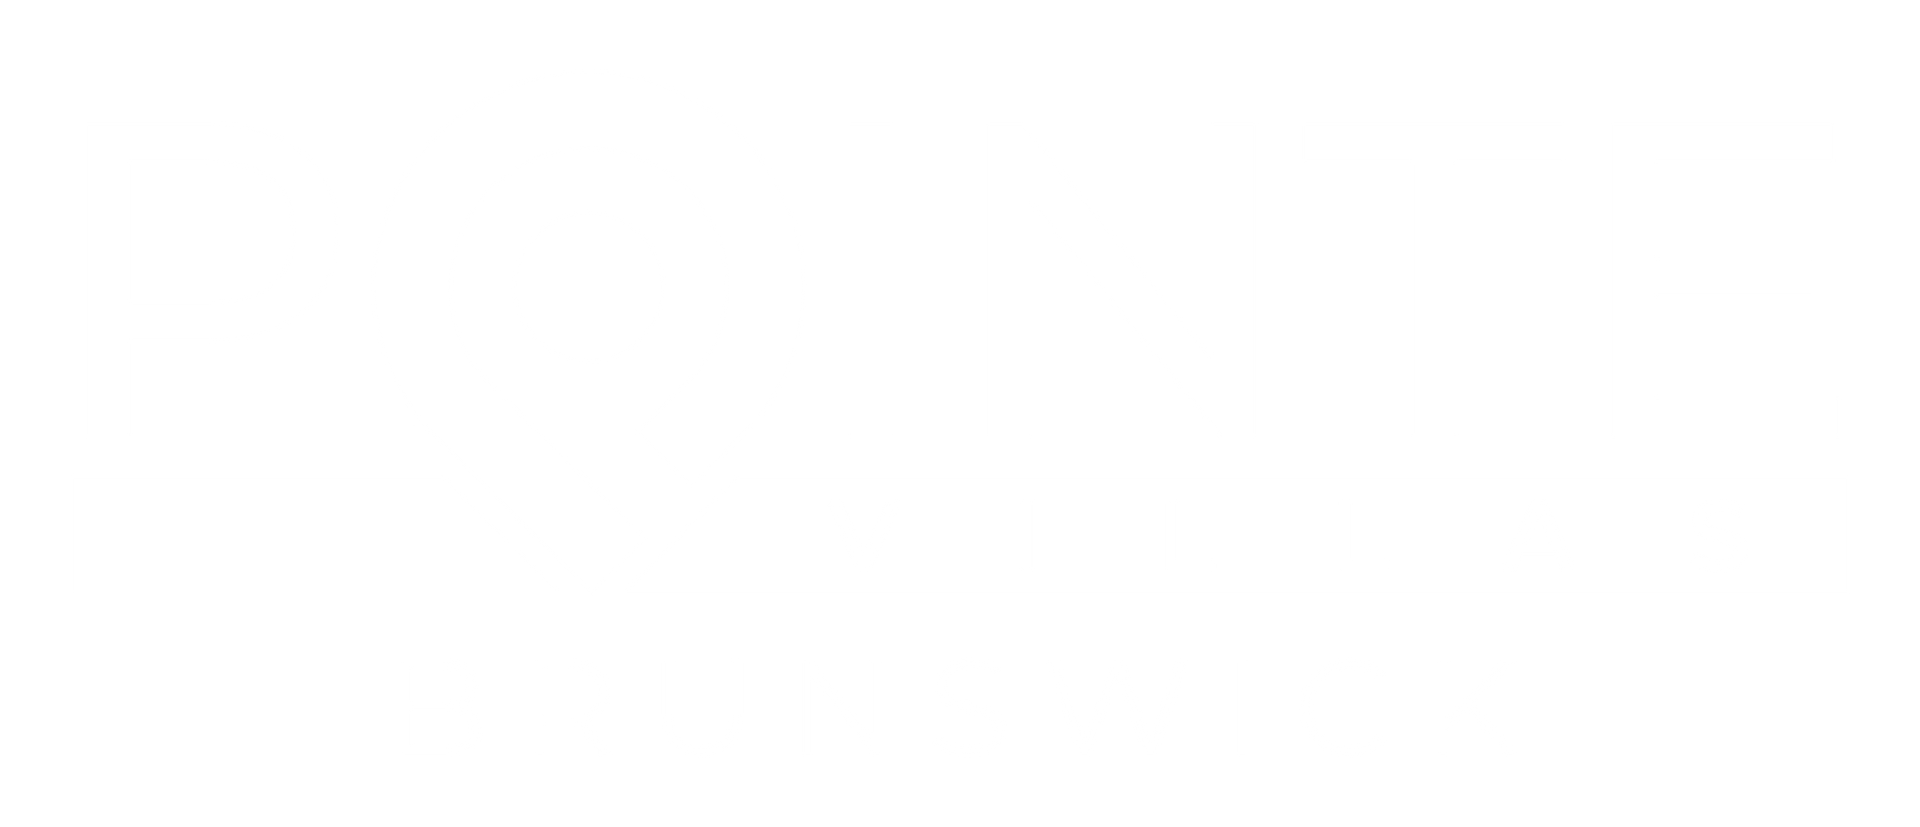 Pointe Villas Brunswick GA Logo #2